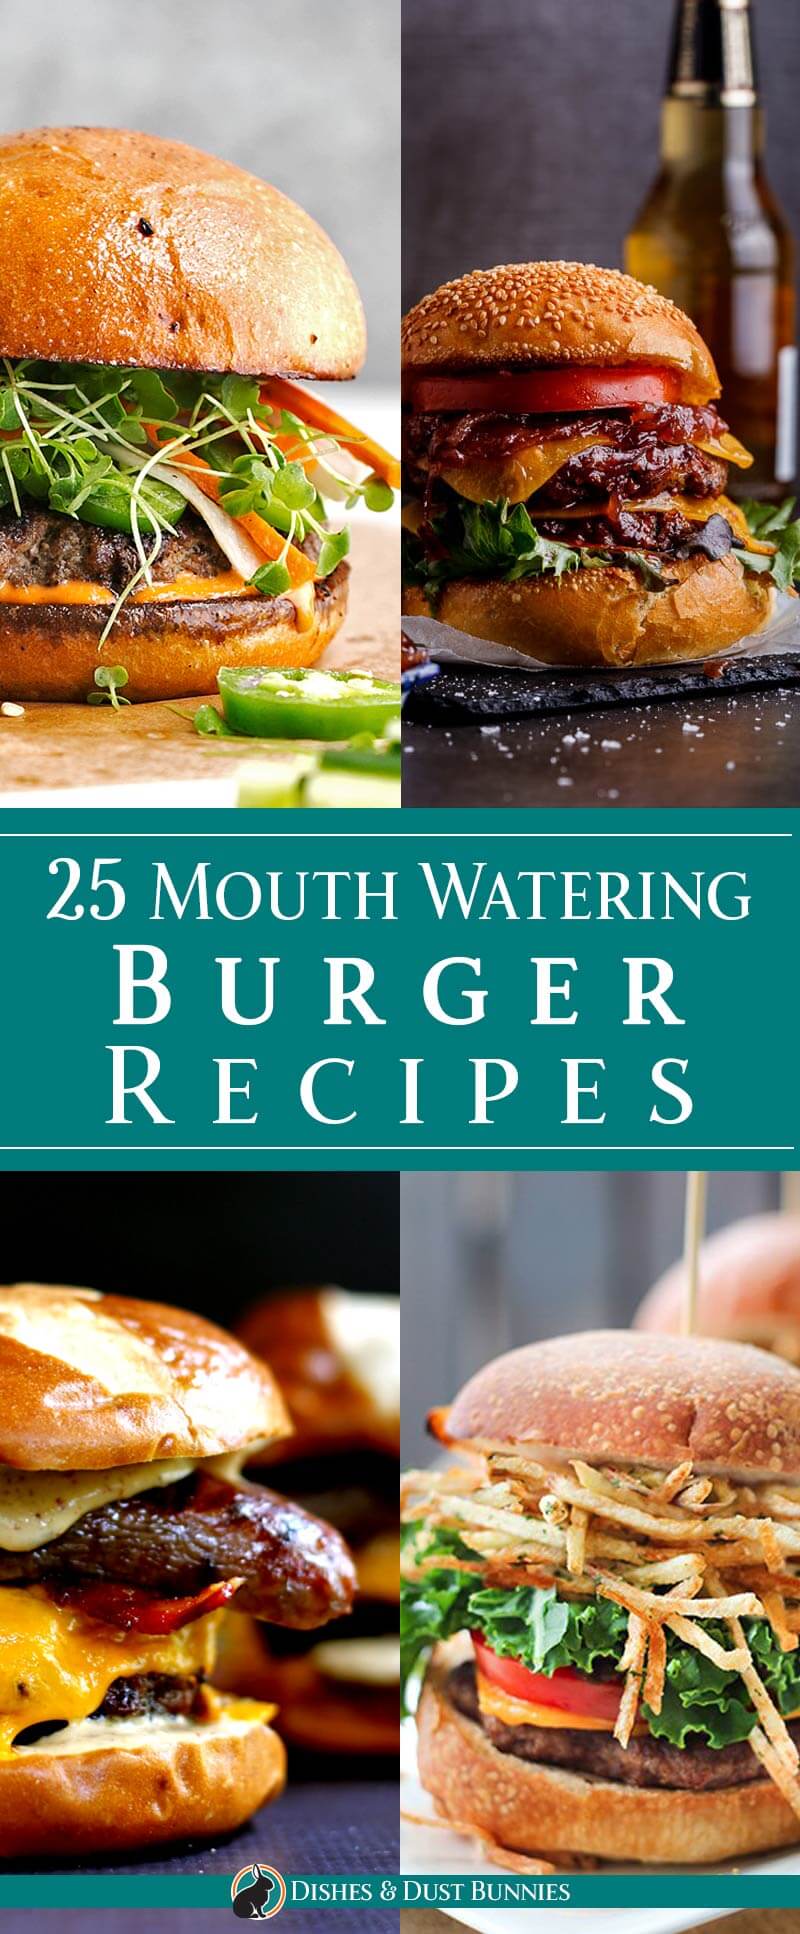 25 Mouth Watering Burger Recipes - dishesanddustbunnies.com